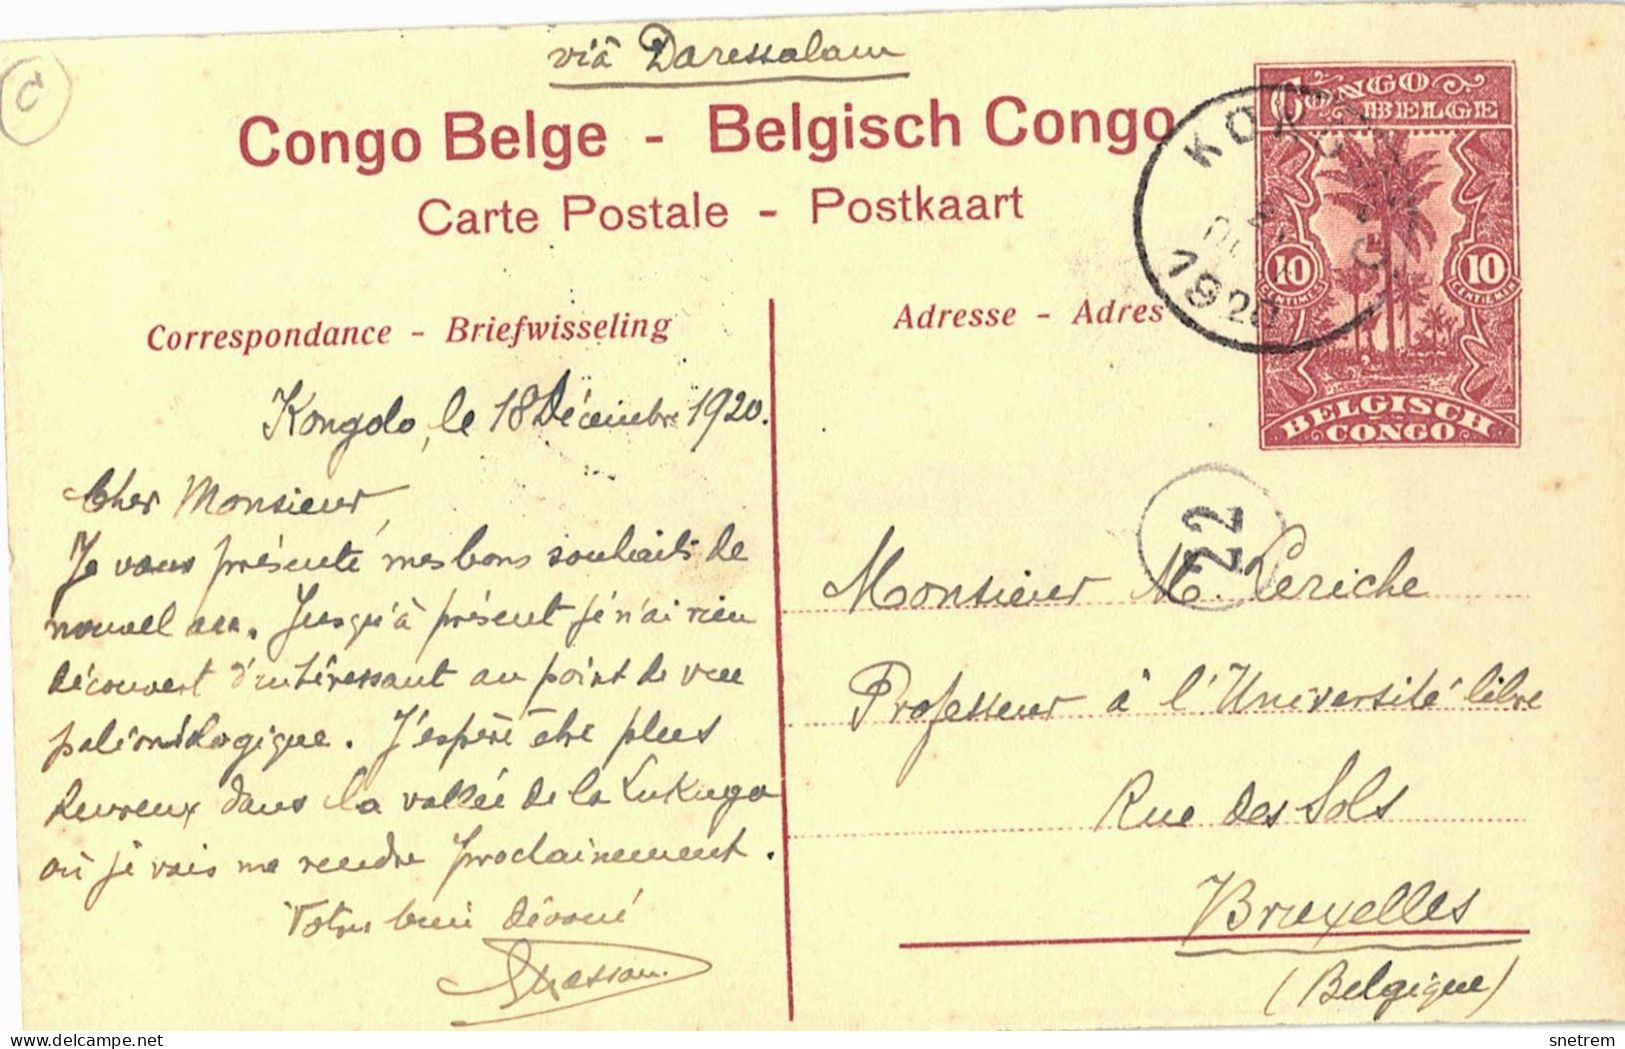 Congo Belge - Carte Prétimbrée No 63 - La Ruzizi - Belgian Congo